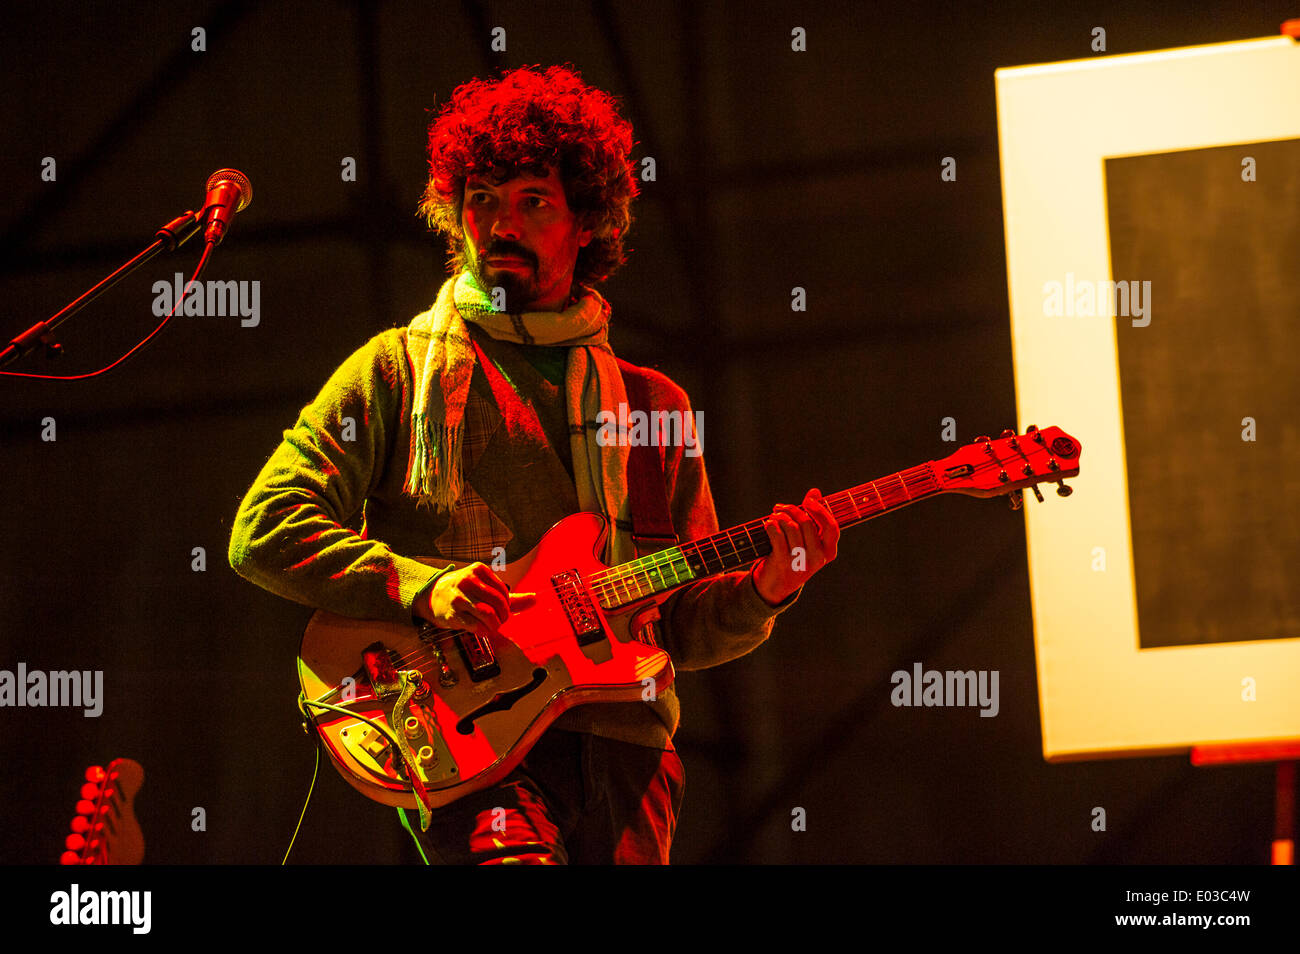 Turin, Italie. Apr 30, 2014. Torino Jazz Festival Concert de Caetano Veloso - Pedro Sà guitariste : crédit facile vraiment Star/Alamy Live News Banque D'Images